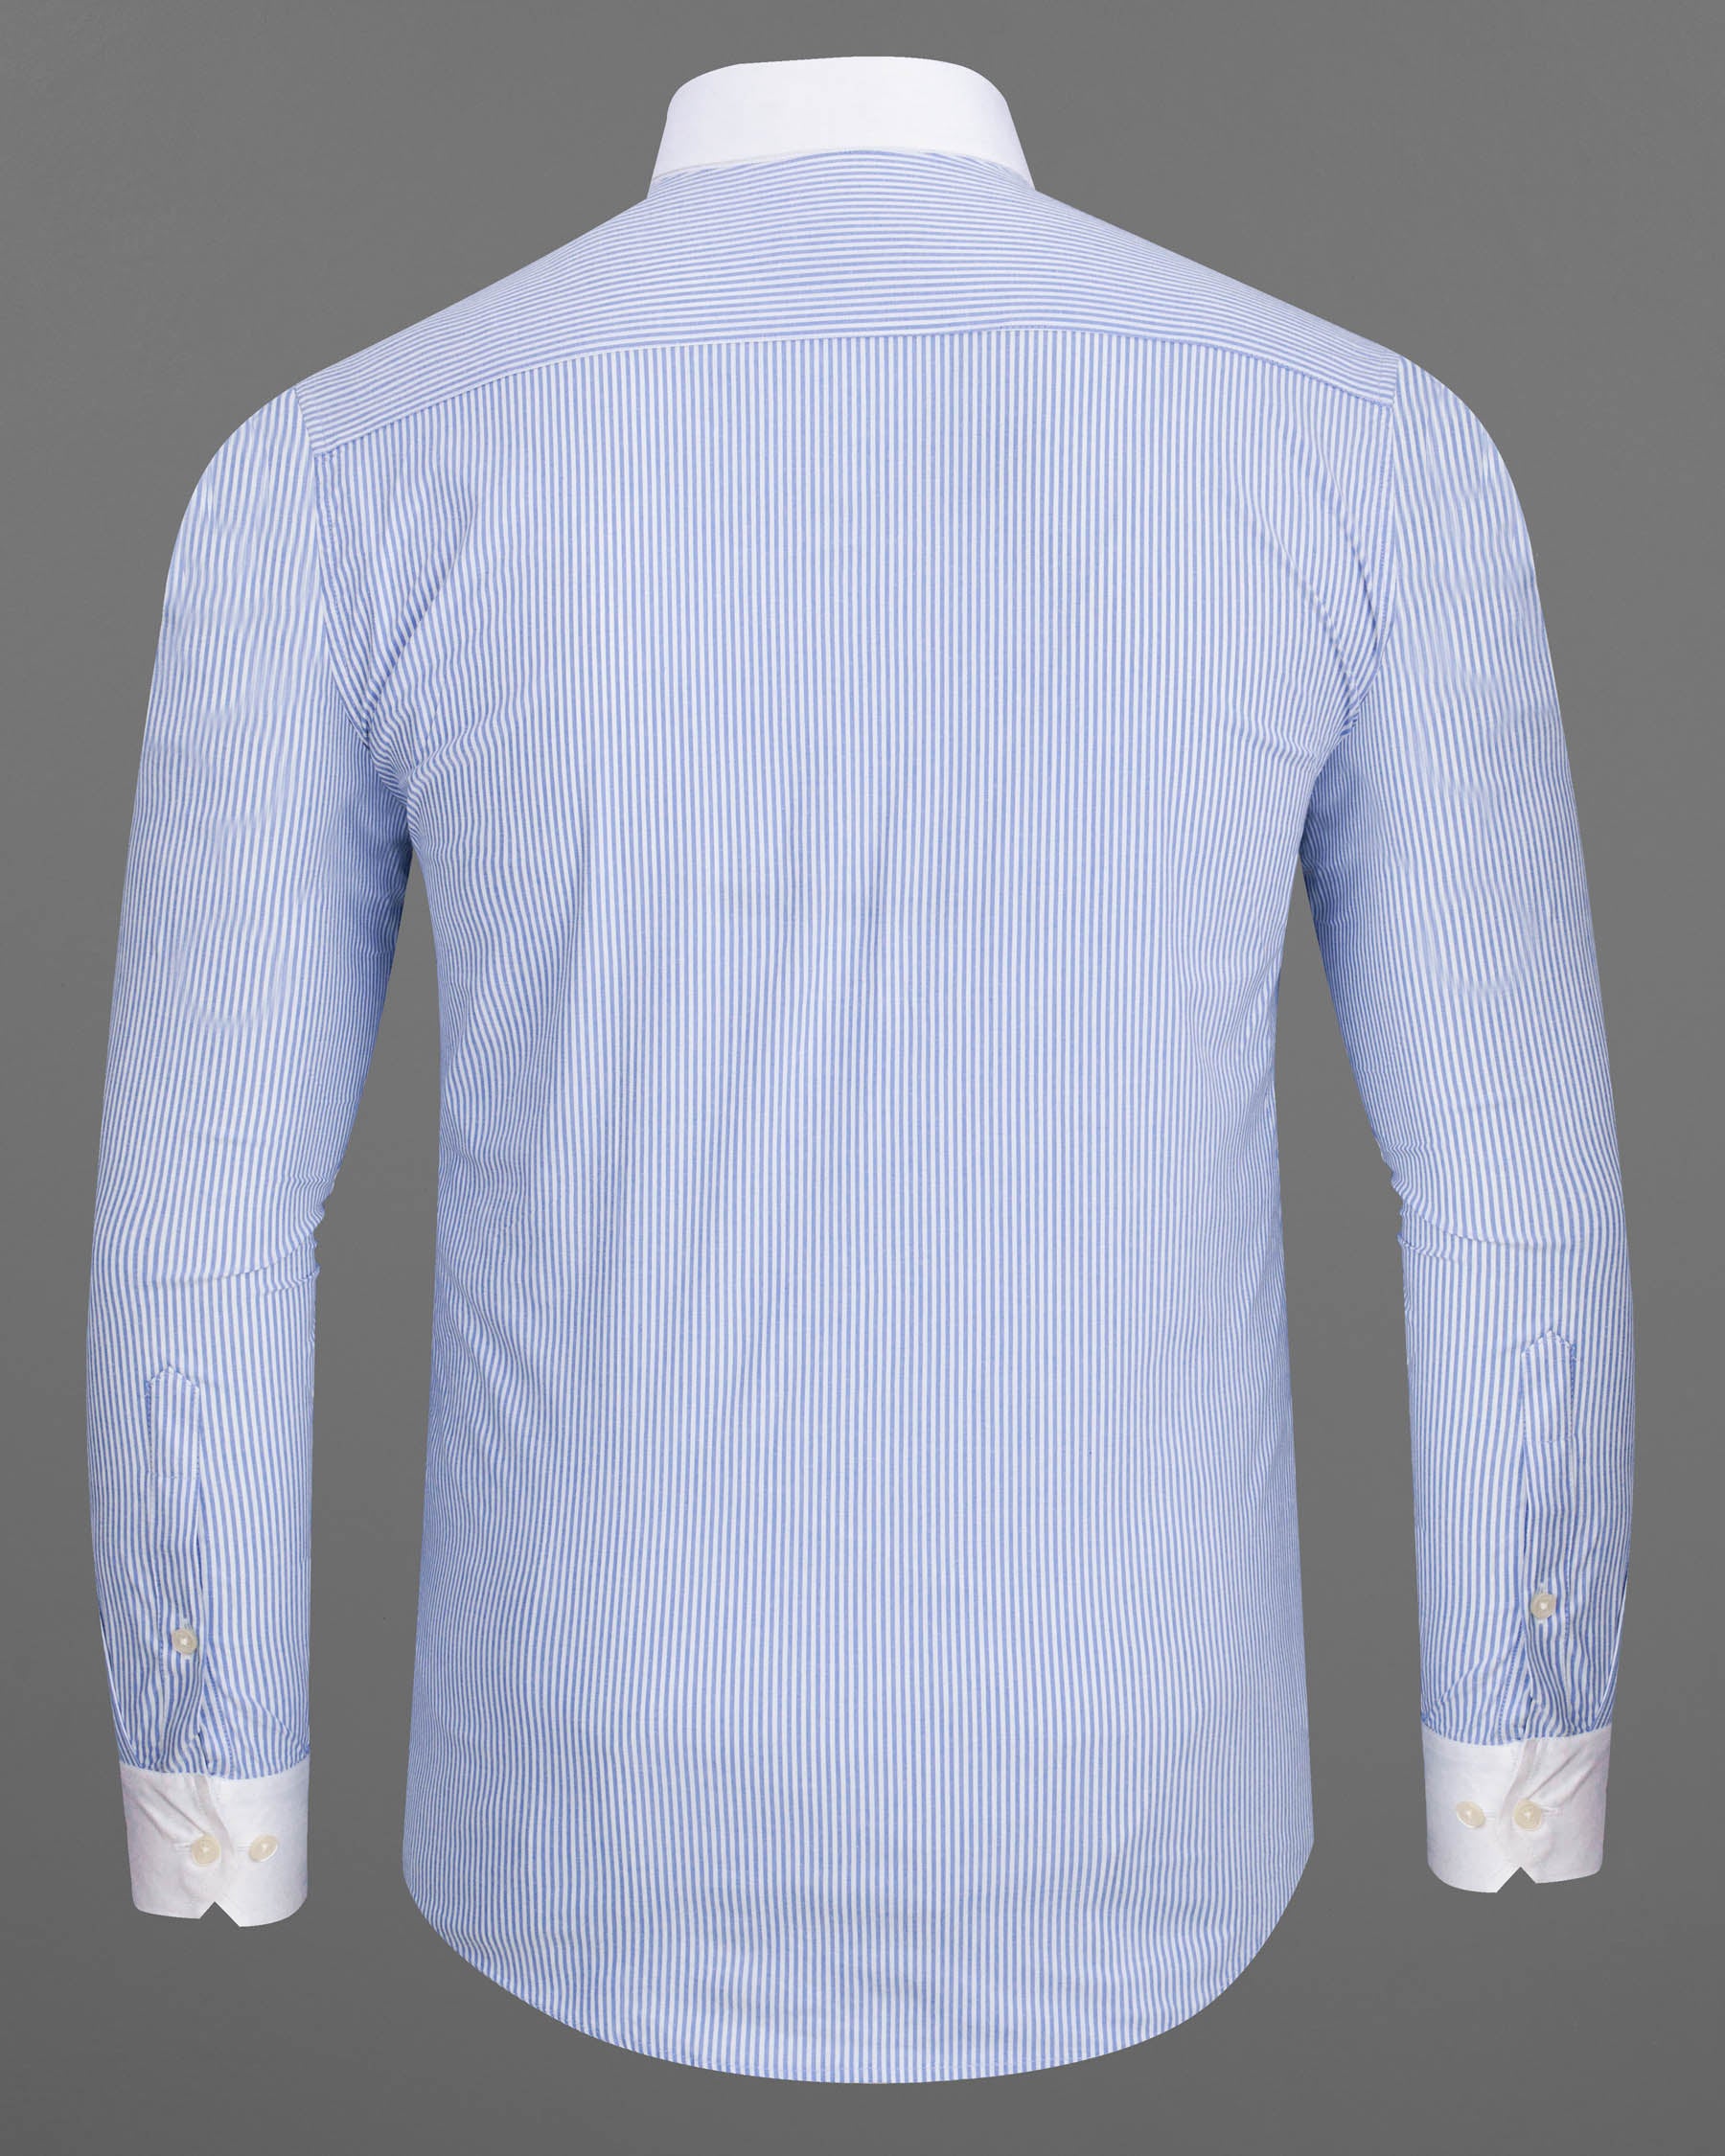 Periwinkle Blue Striped with White Collar Premium Cotton Shirt 6613-WCC-38,6613-WCC-H-38,6613-WCC-39,6613-WCC-H-39,6613-WCC-40,6613-WCC-H-40,6613-WCC-42,6613-WCC-H-42,6613-WCC-44,6613-WCC-H-44,6613-WCC-46,6613-WCC-H-46,6613-WCC-48,6613-WCC-H-48,6613-WCC-50,6613-WCC-H-50,6613-WCC-52,6613-WCC-H-52